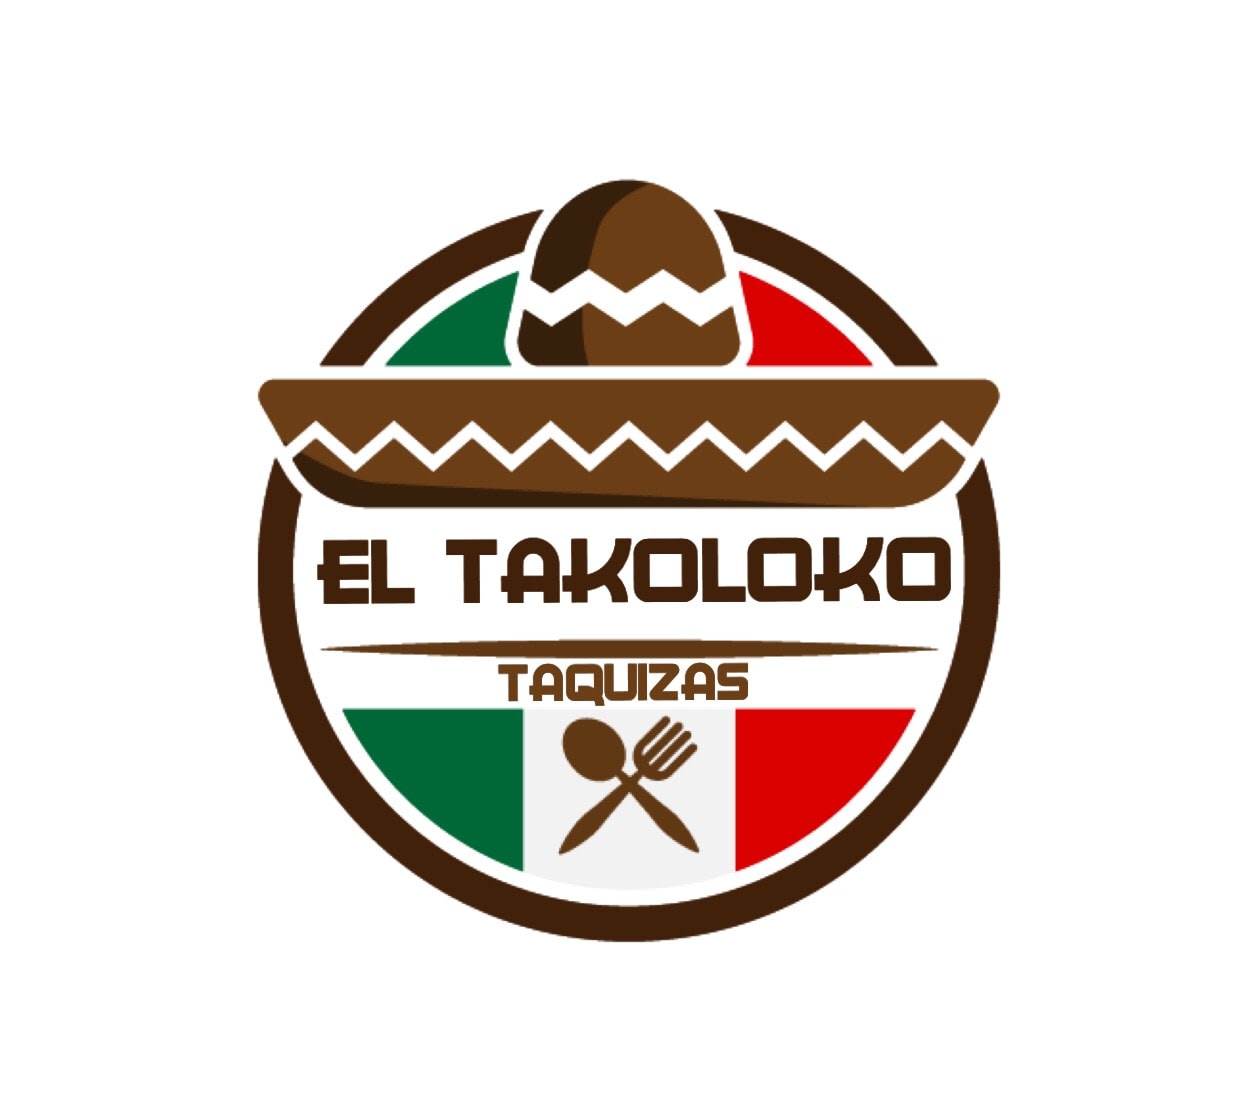 El Takoloko